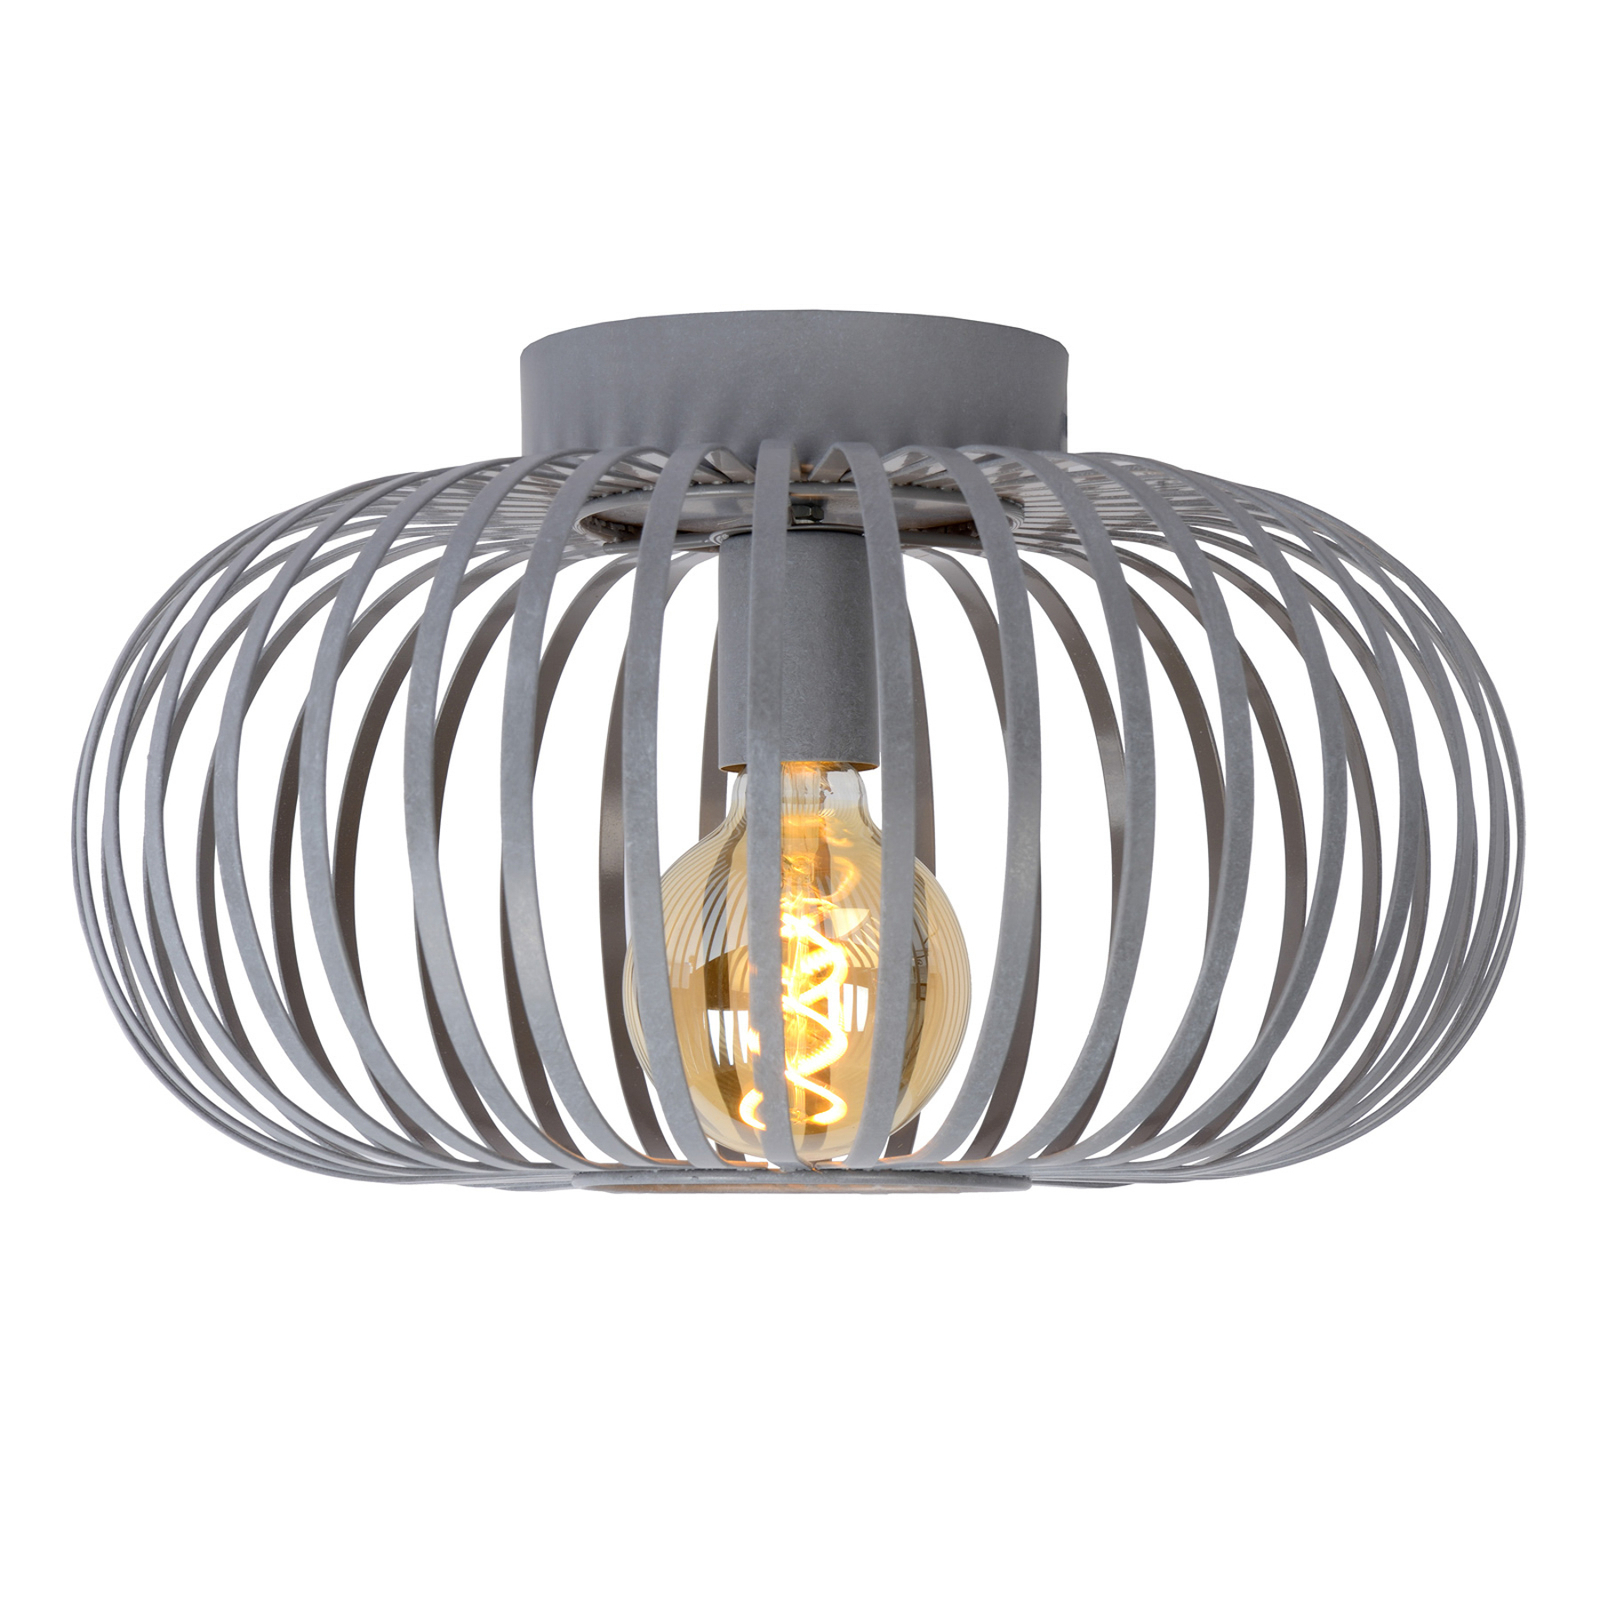 Manuela cage loftslampe, Ø 40 cm, grå